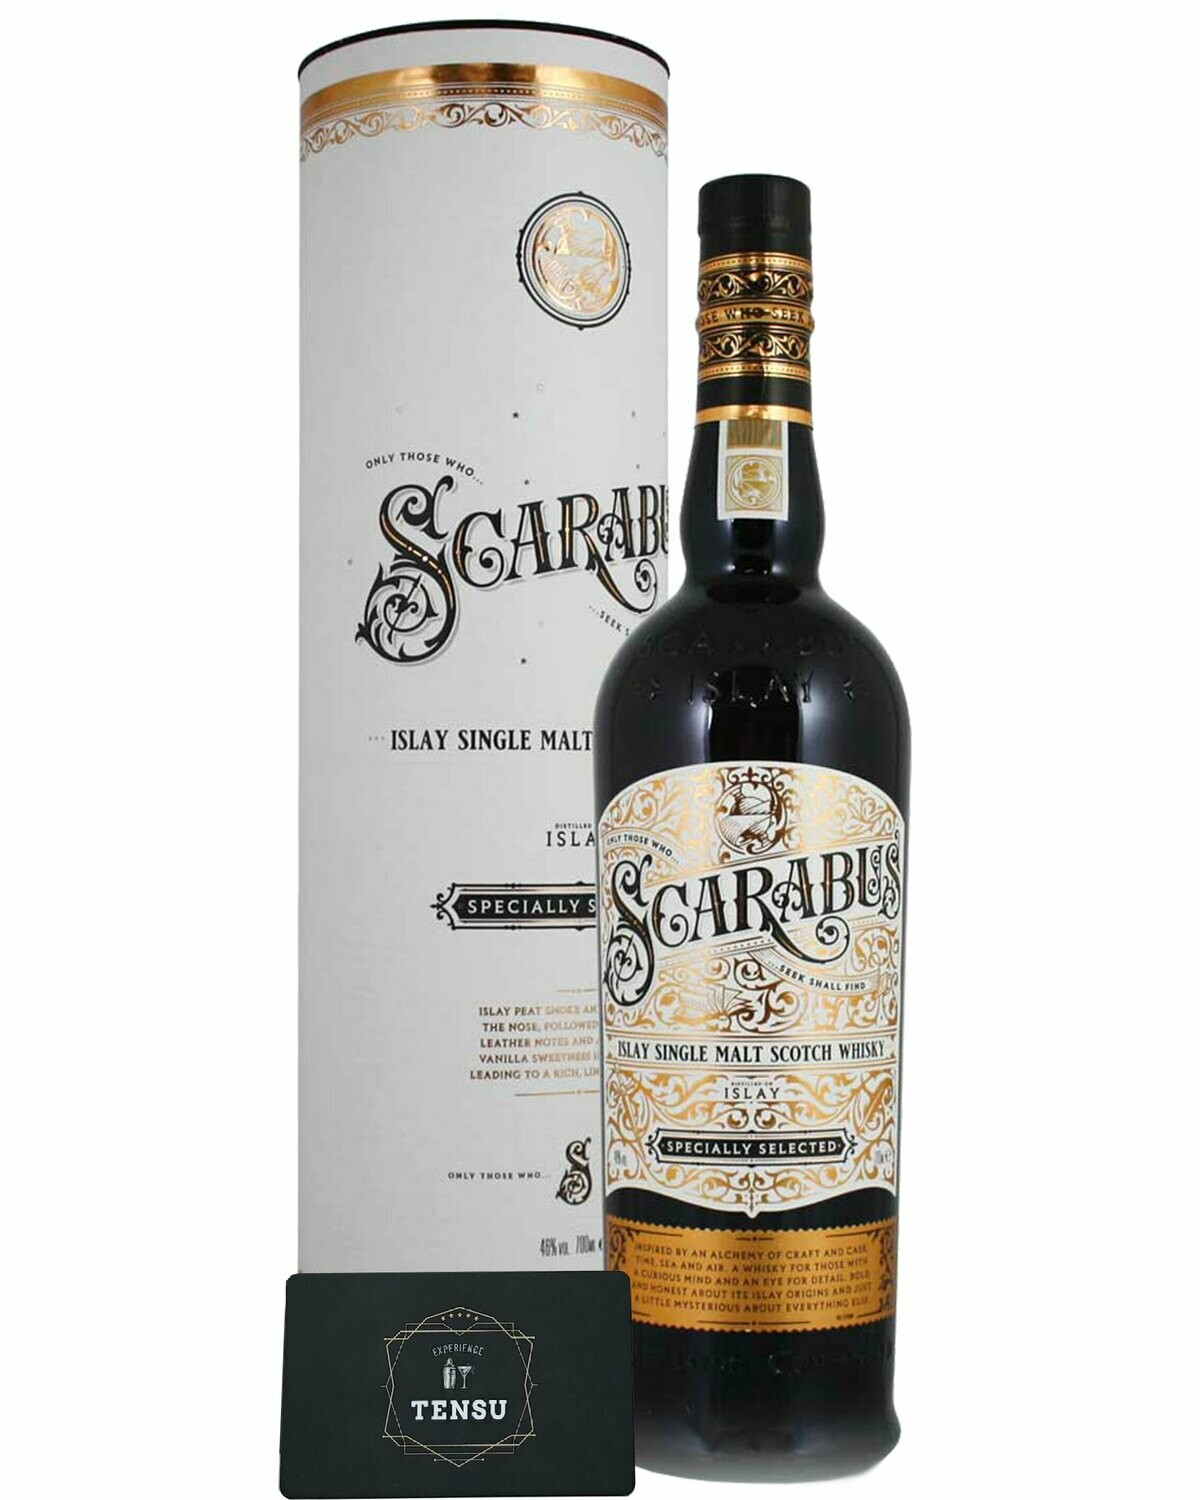 Scarabus Islay Single Malt Whisky 46.0 "Hunter Laing"